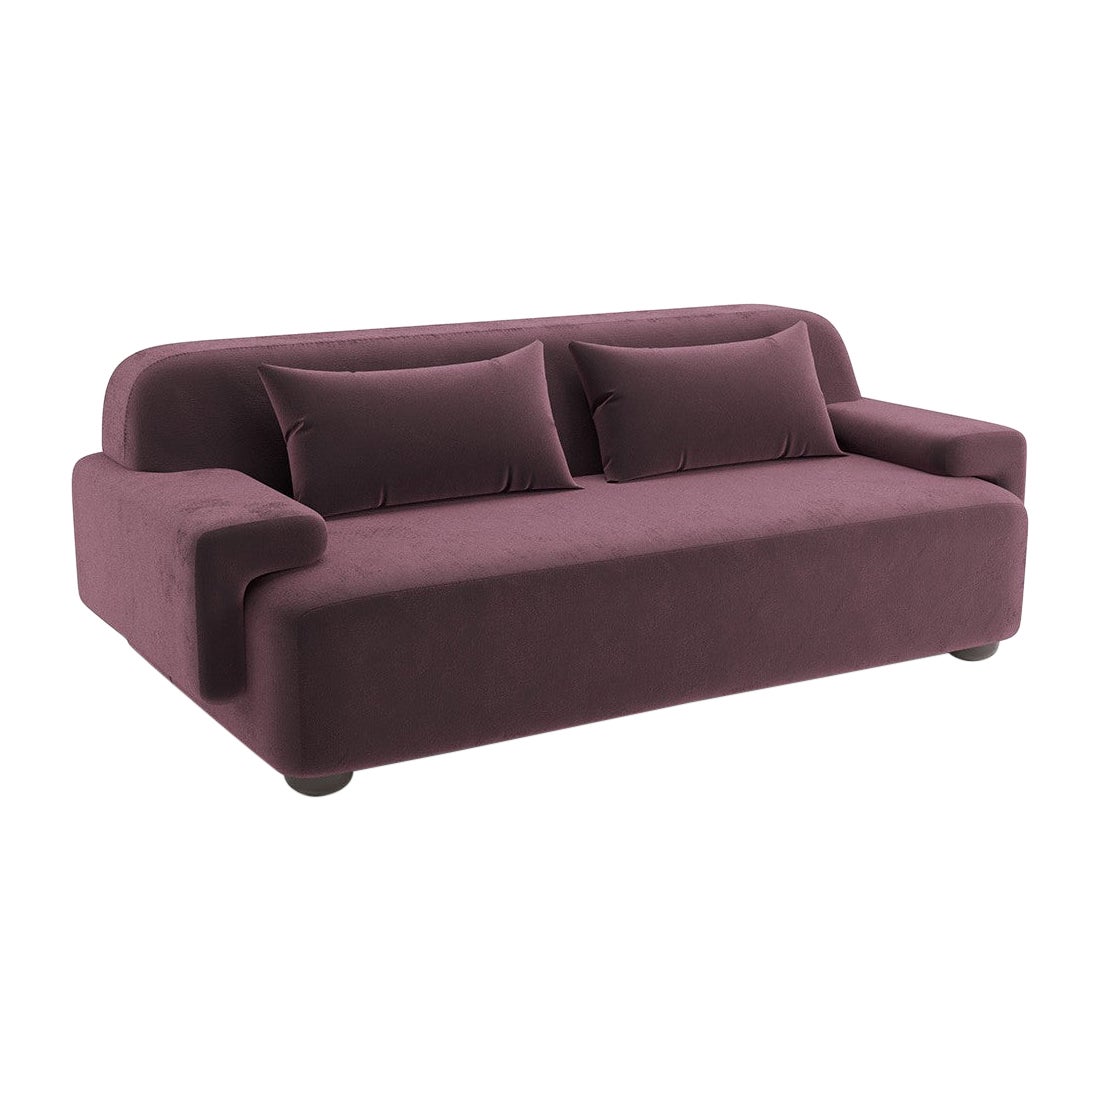 Popus Editions Lena 3 Seater Sofa in Bordeaux Como Velvet Upholstery